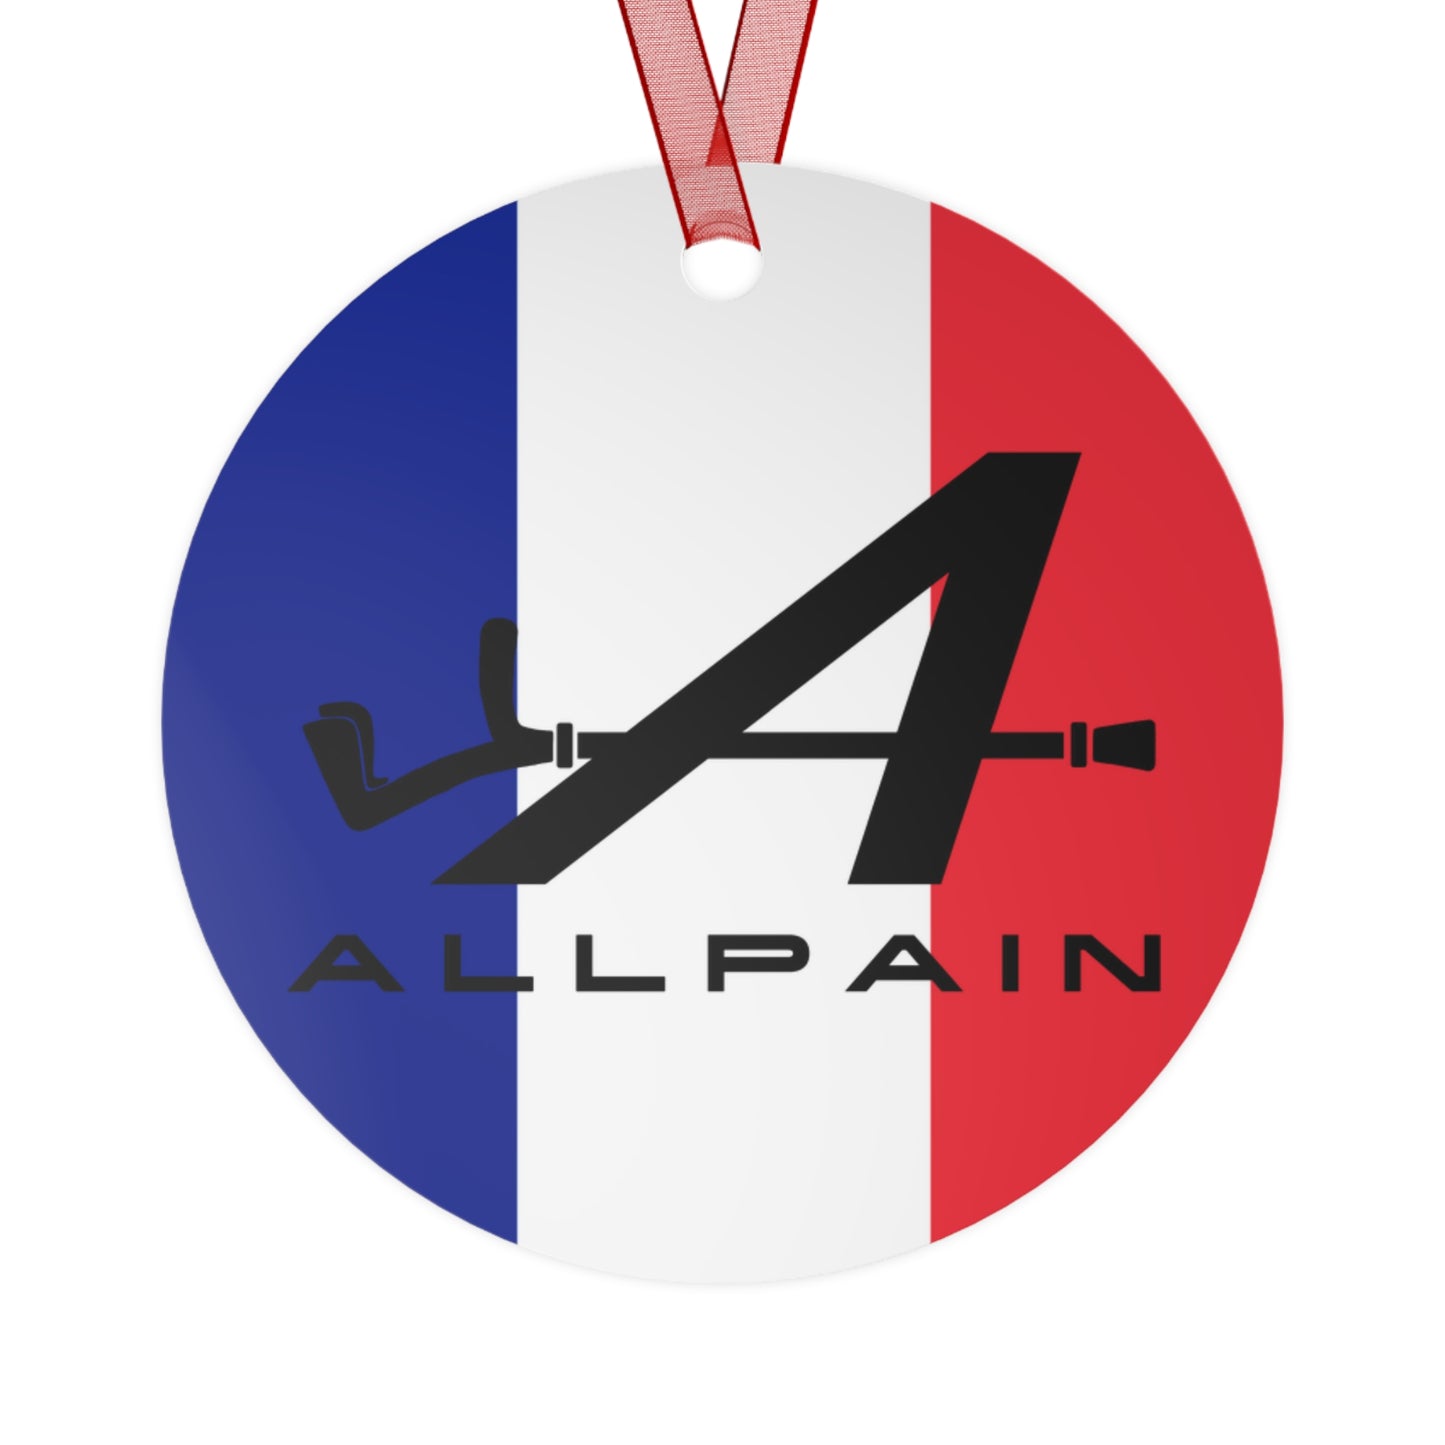 Allpain Alpine F1 Formula 1 Pierre Gasly Esteban Ocon Metal Ornament Next Cult Brand Alpine, F1